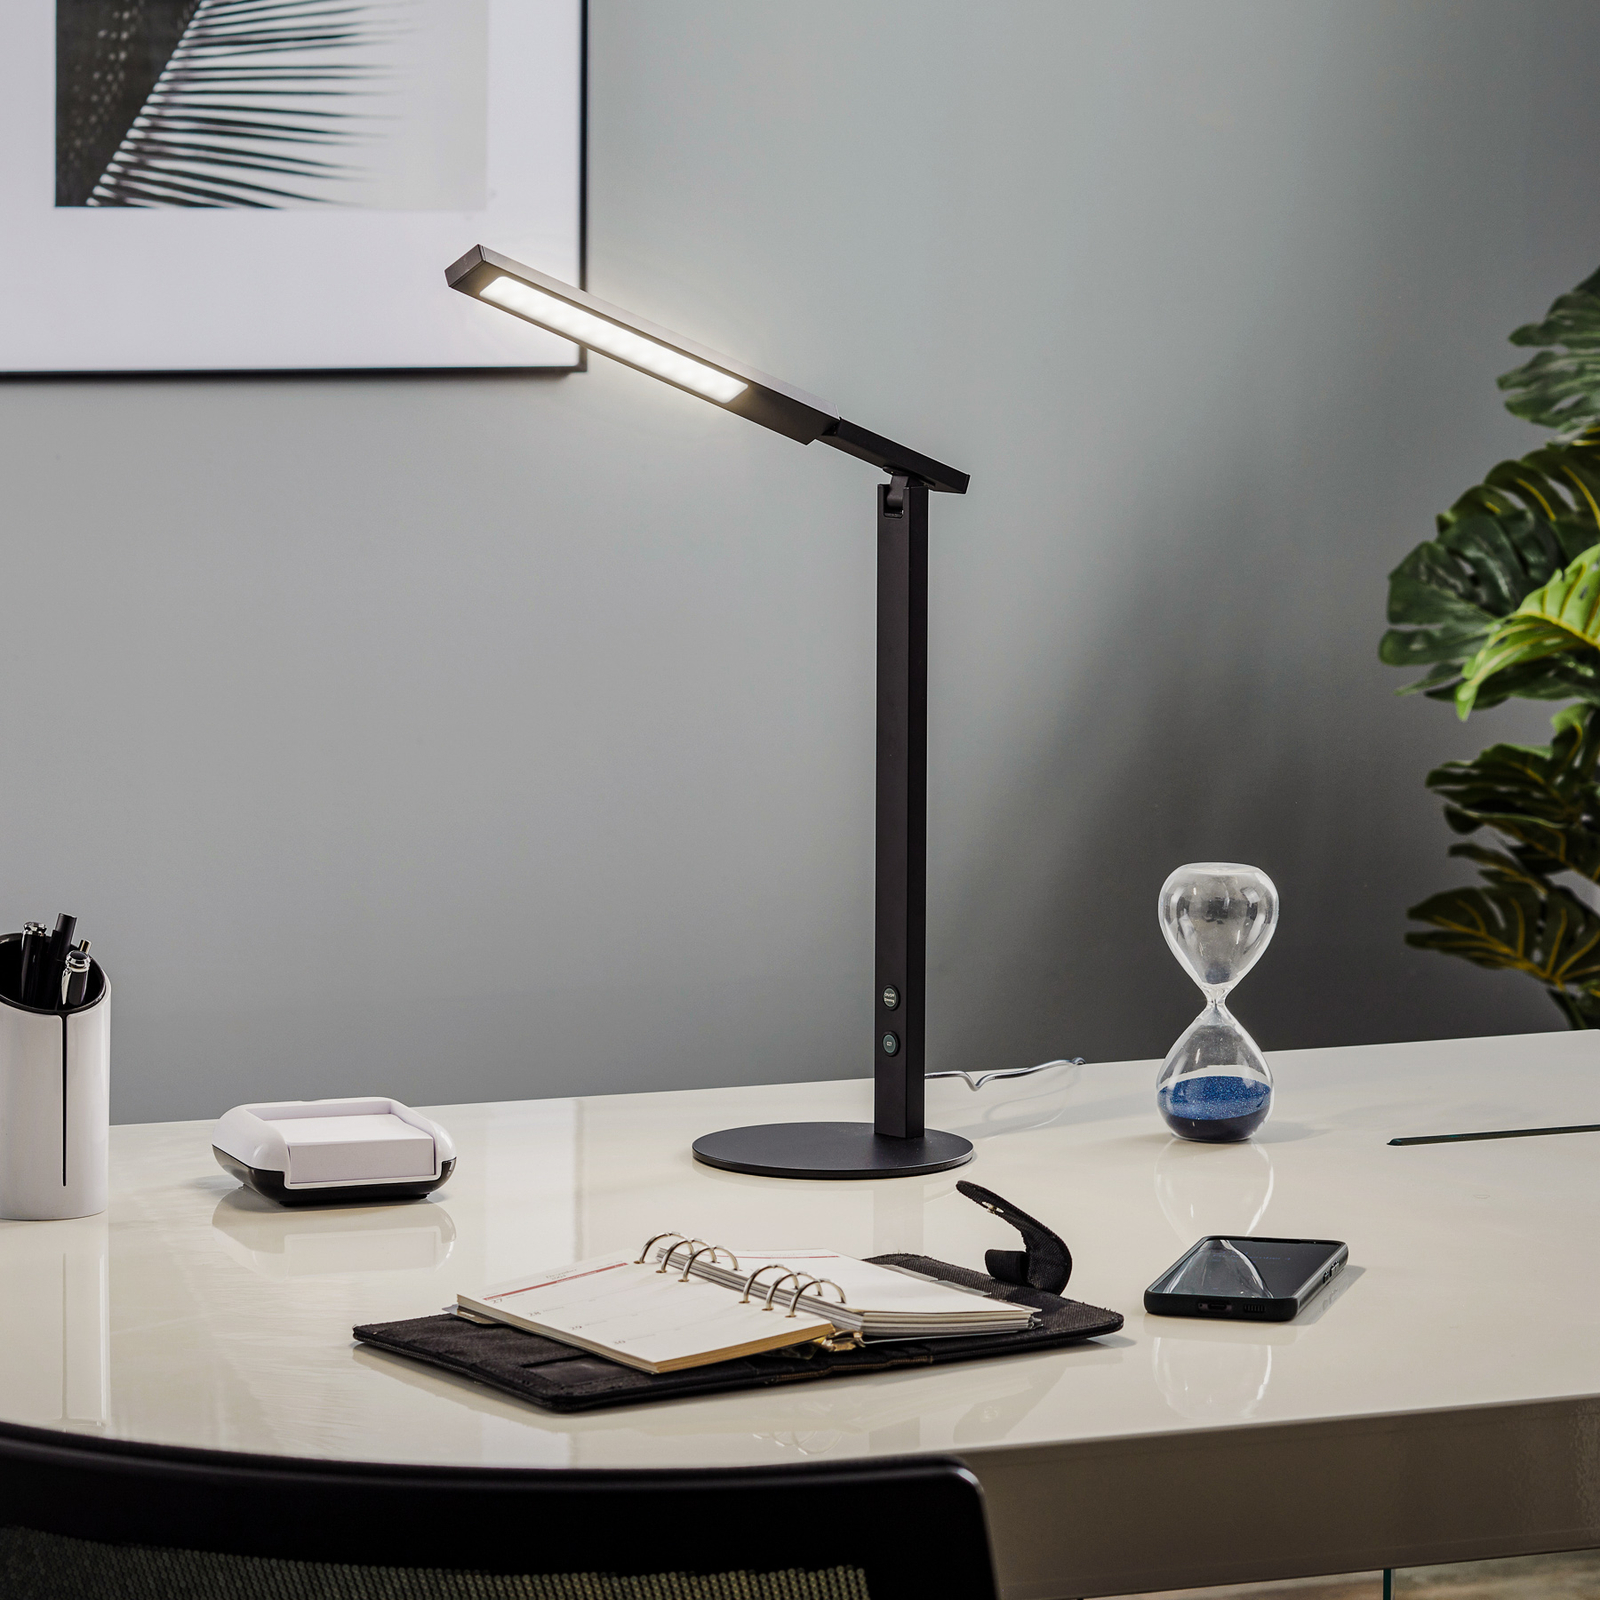 LED bureaulamp Ideal met dimmer, zwart